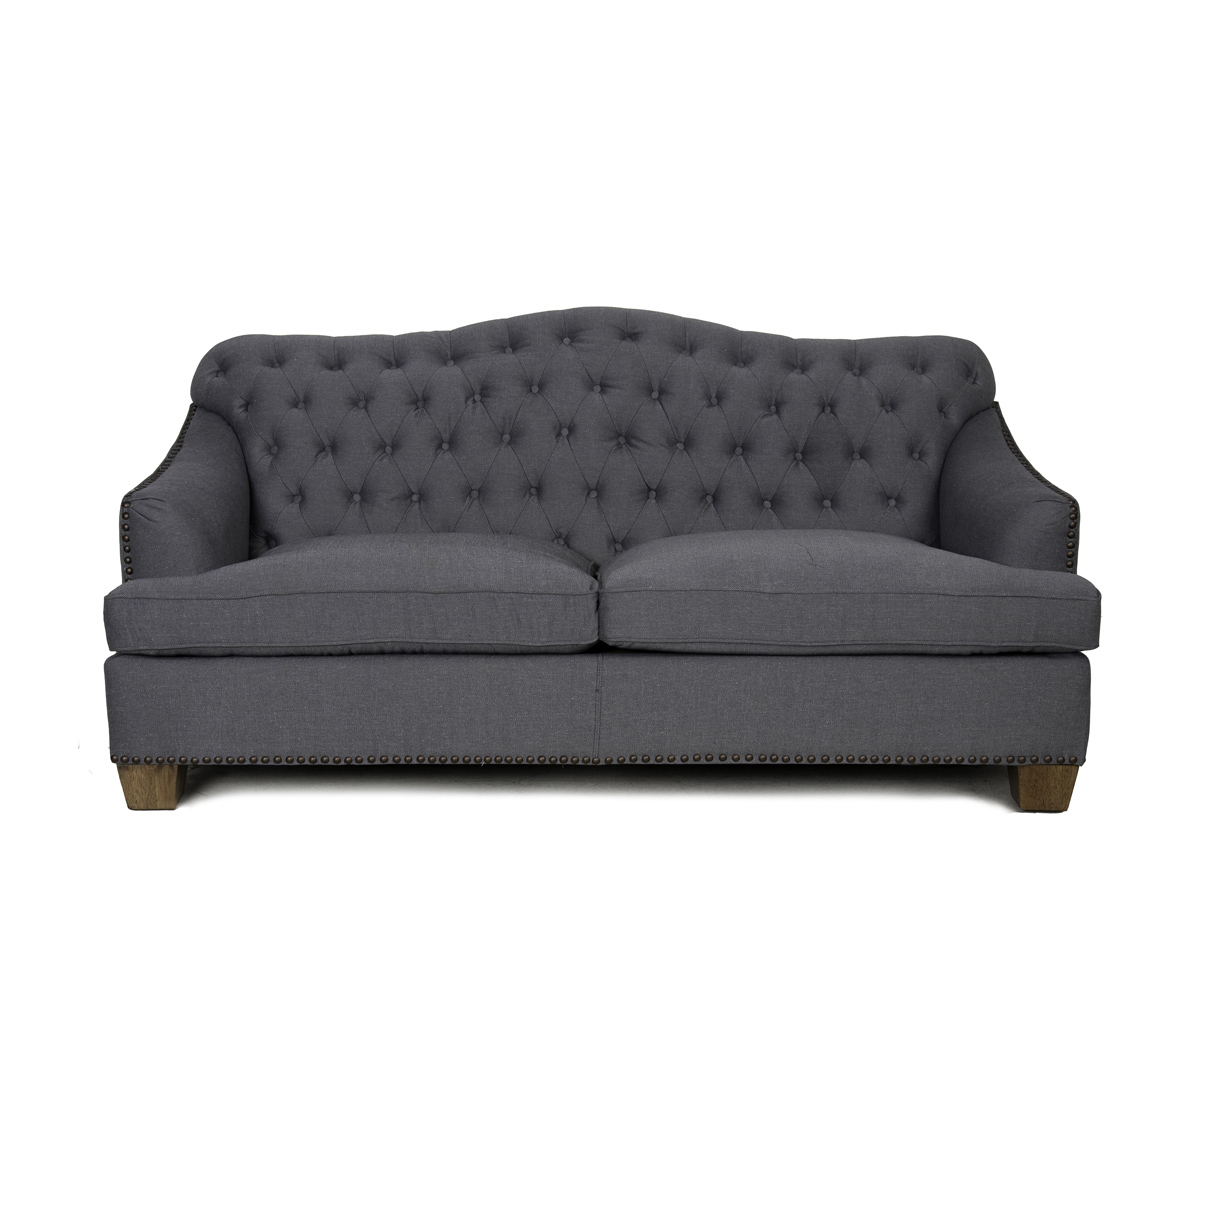 Bardot Tufted Sofa With Nailheads – Charcoal | Charcoal Sofa, Kosas With Light Charcoal Linen Sofas (Gallery 16 of 20)